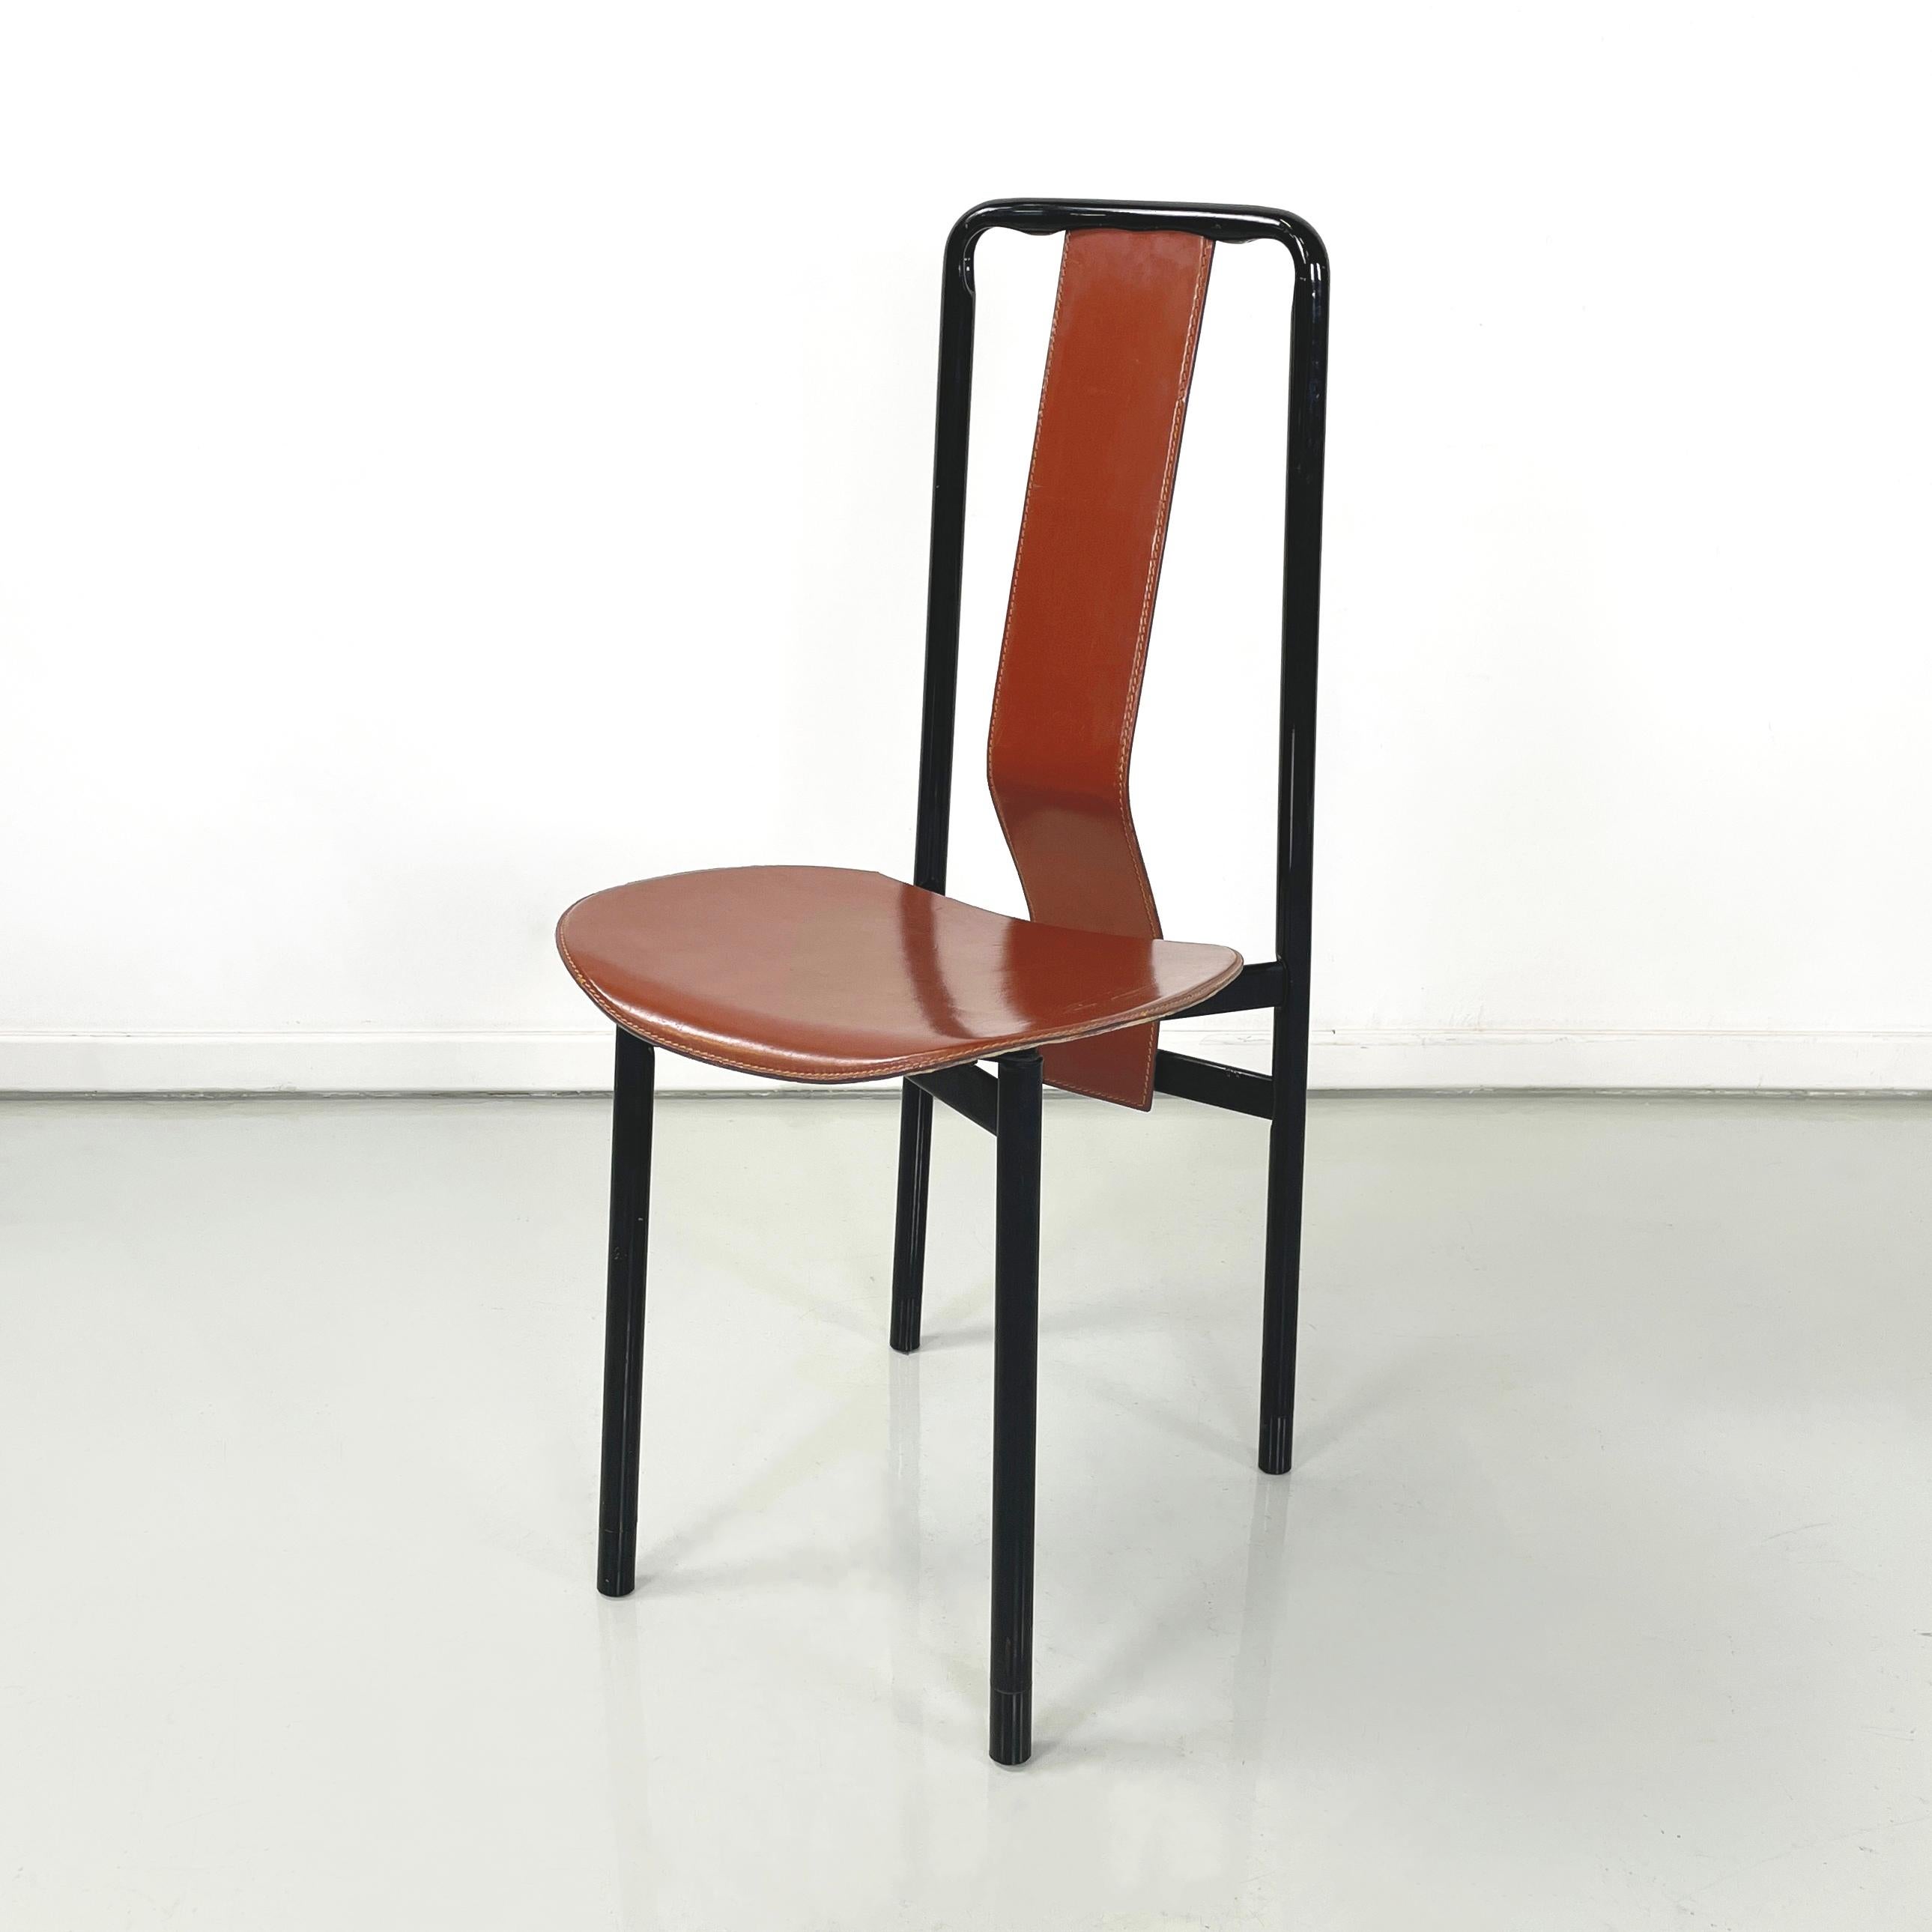 Modern Italian modern Brown leather Chairs Irma by Castiglioni for Zanotta, 1970s For Sale